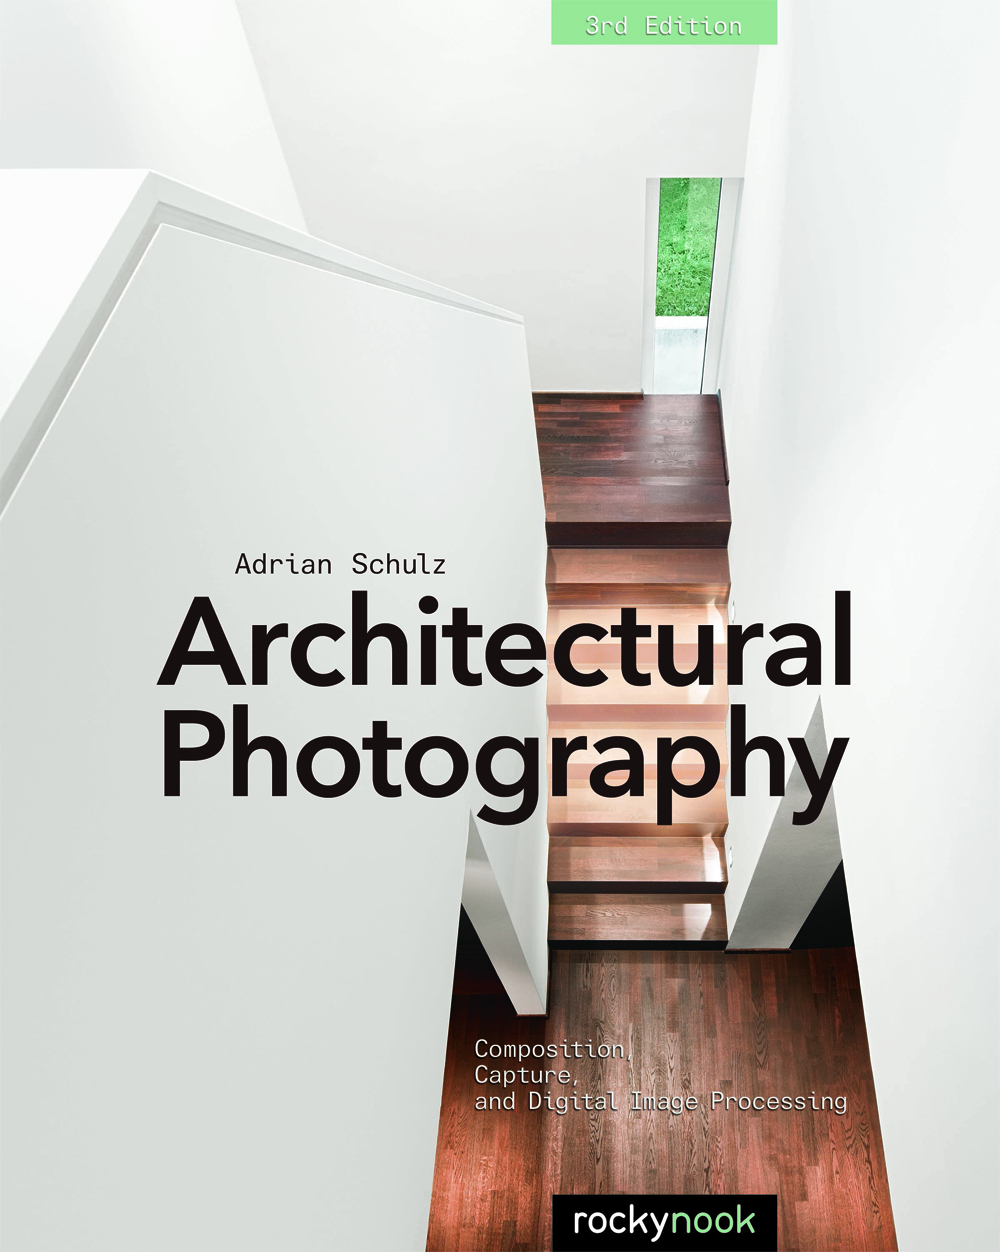 Architecture_3rd_Edition